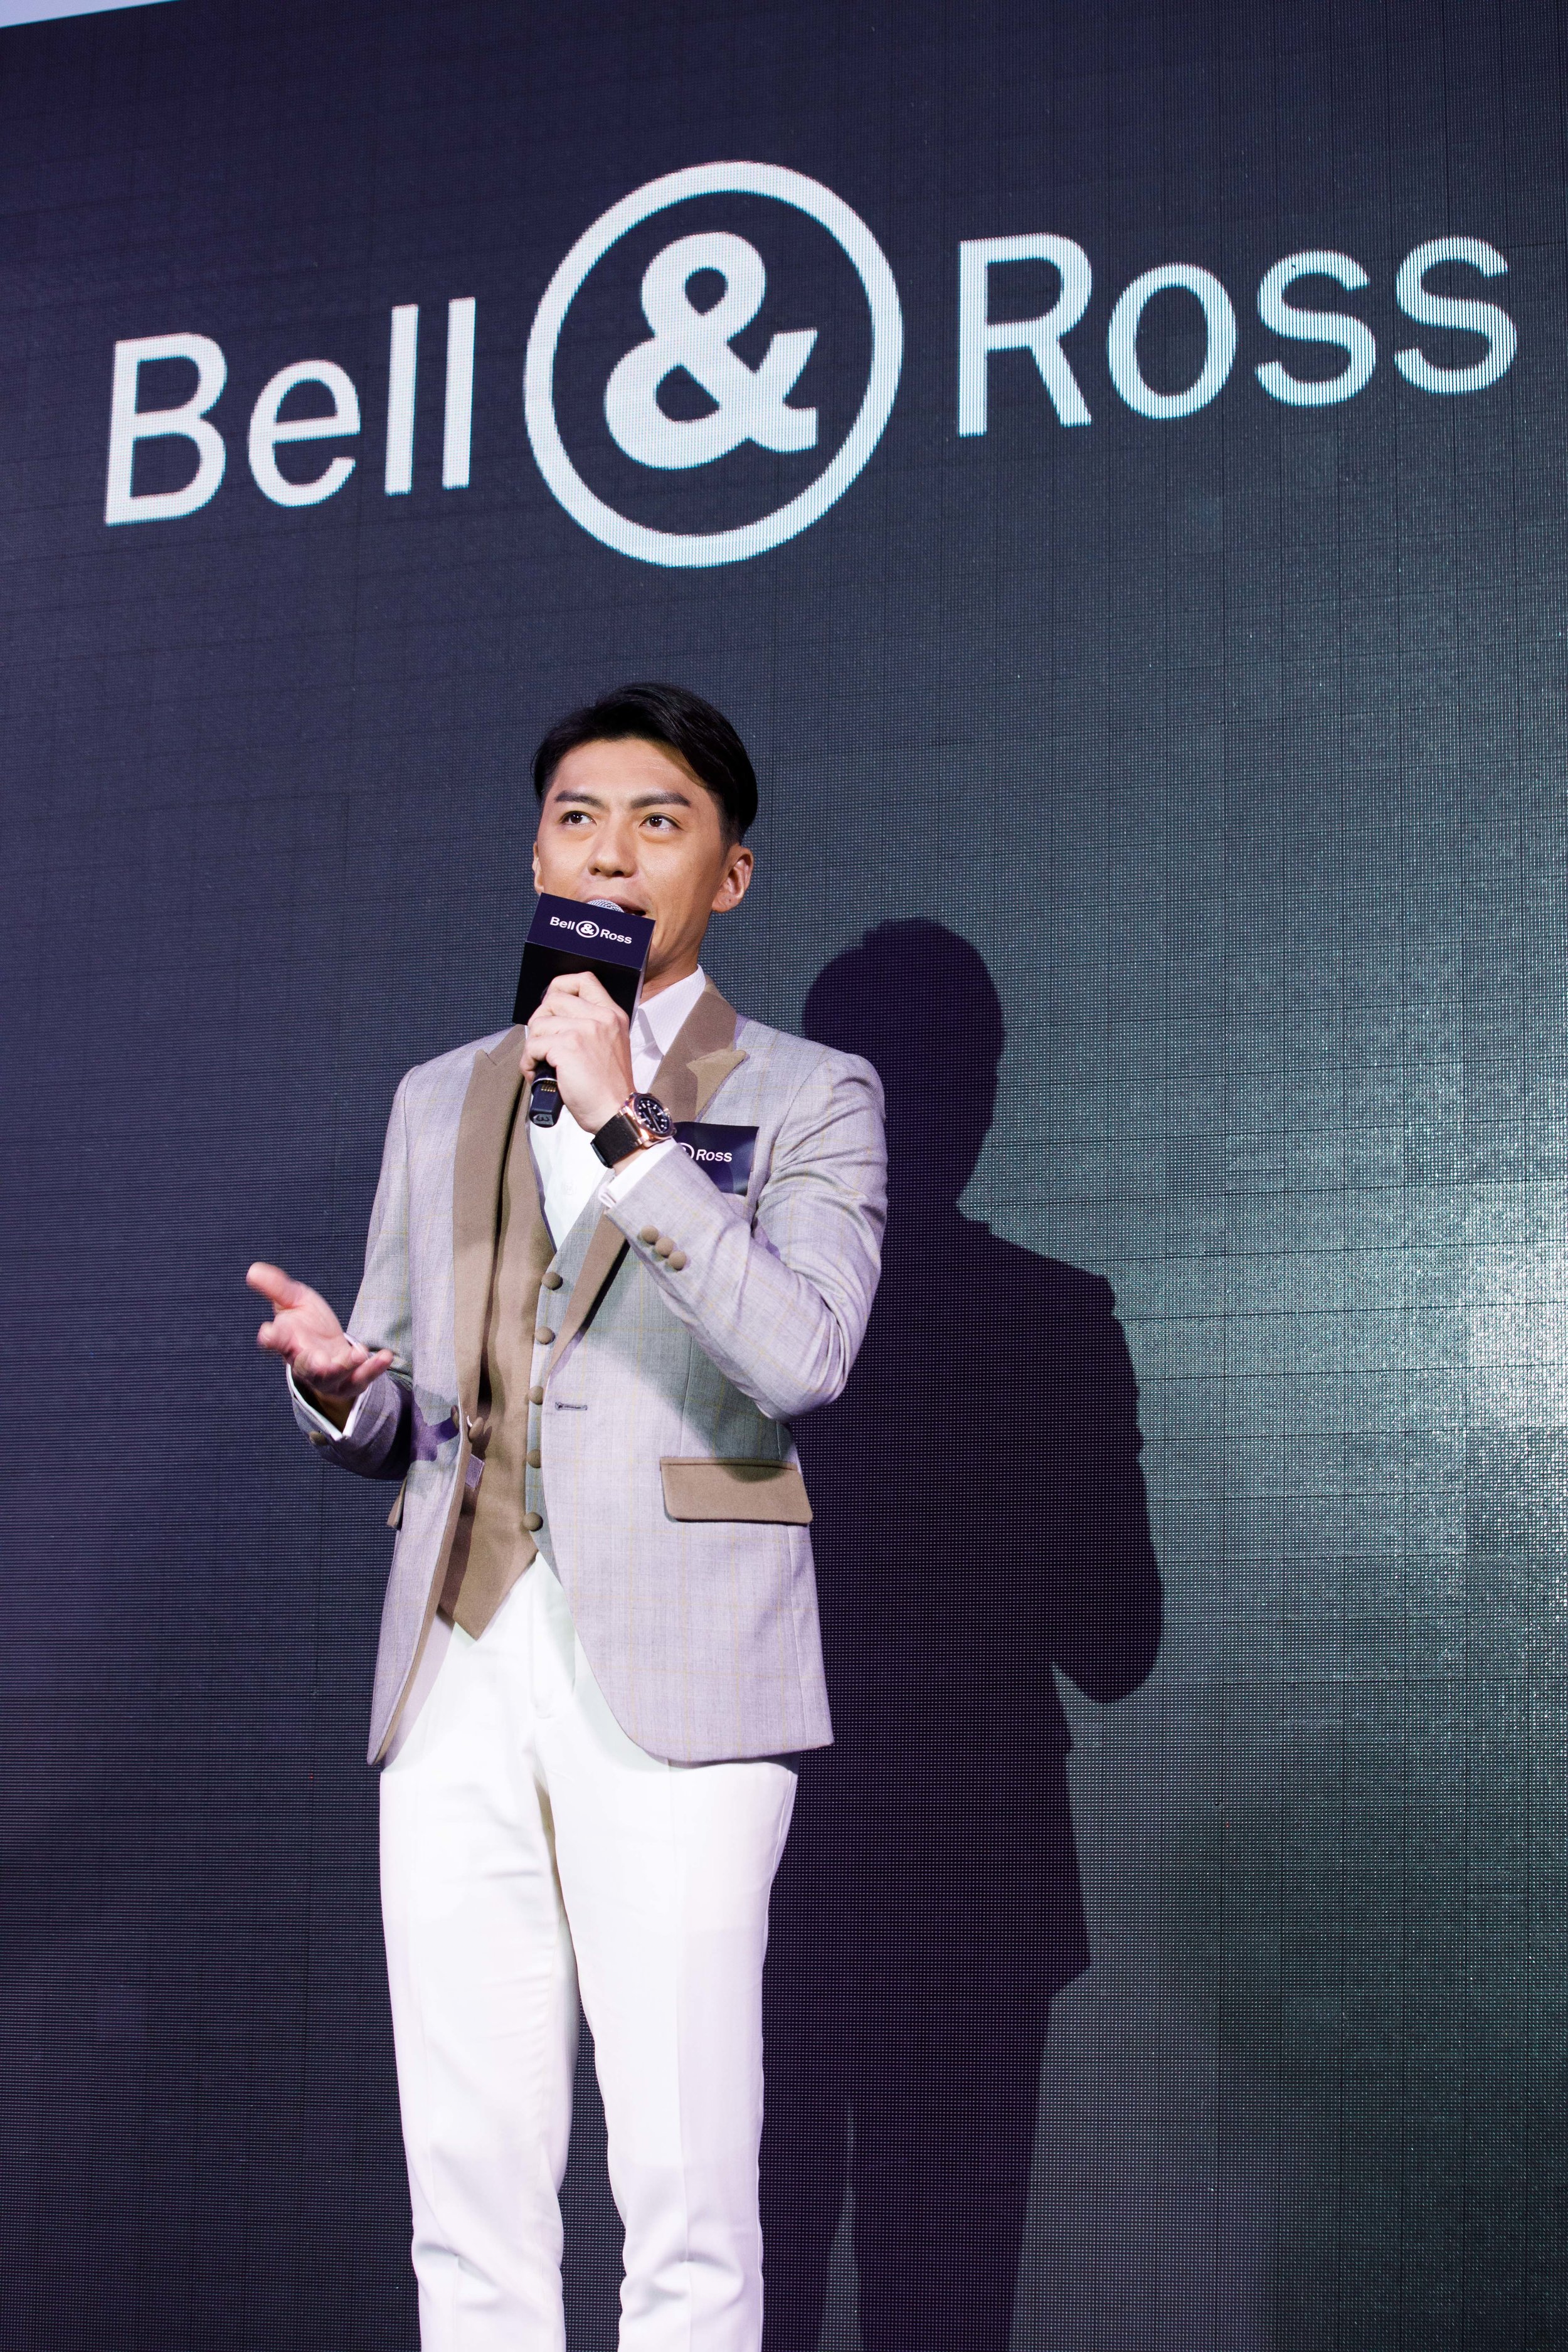 Bell & Ross Event. Benjamin Yuen